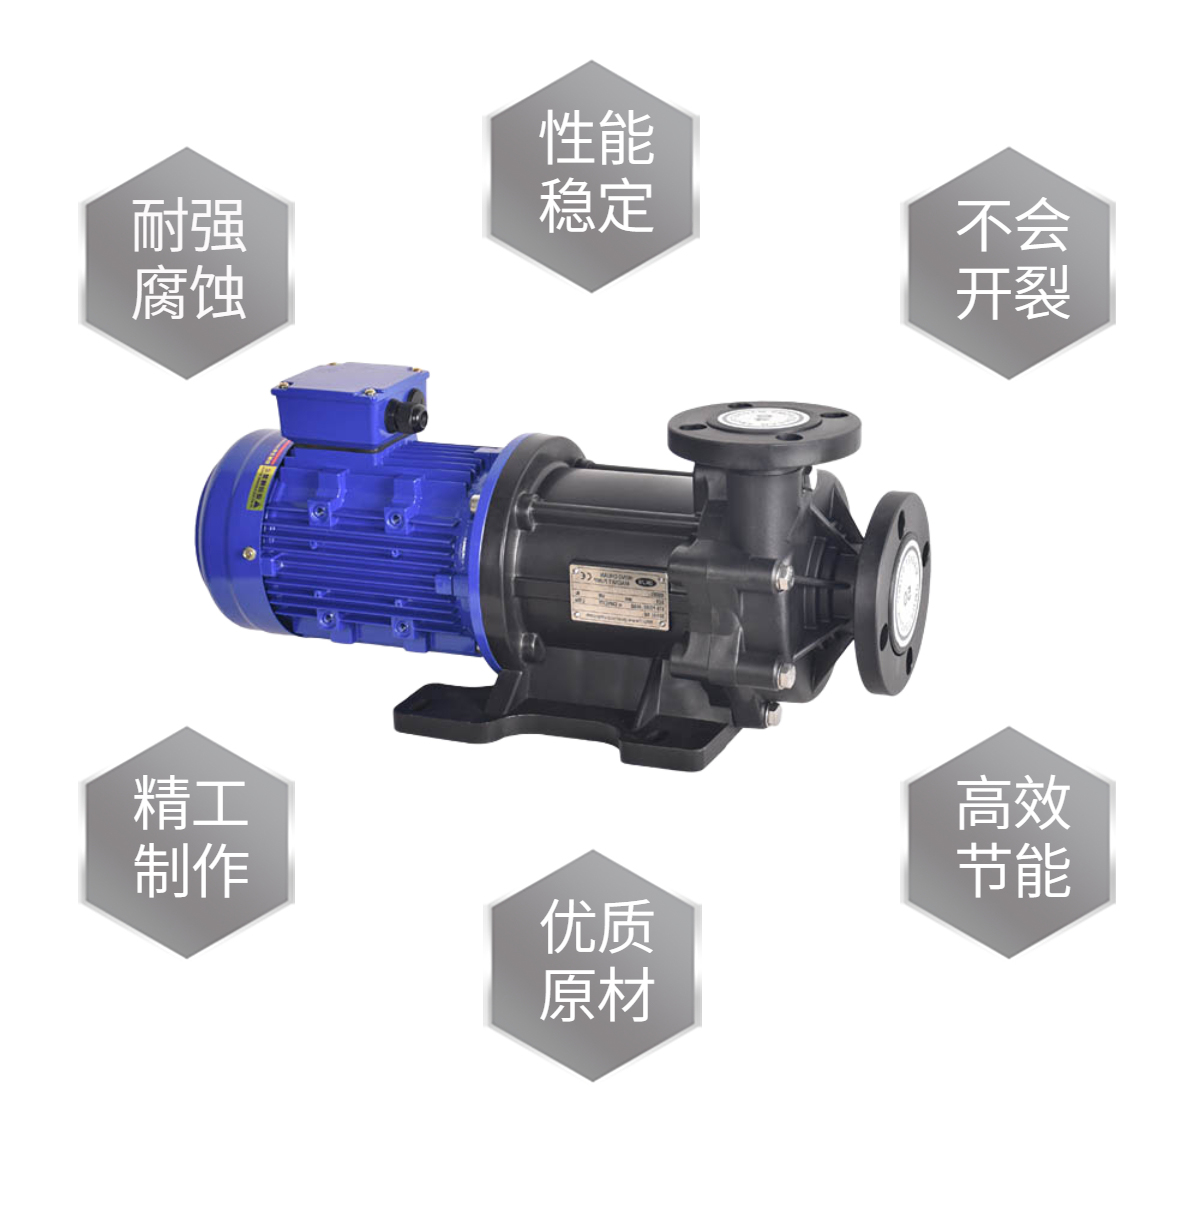 GY-400PW耐酸堿磁力泵 耐腐蝕輸送磁力驅動泵